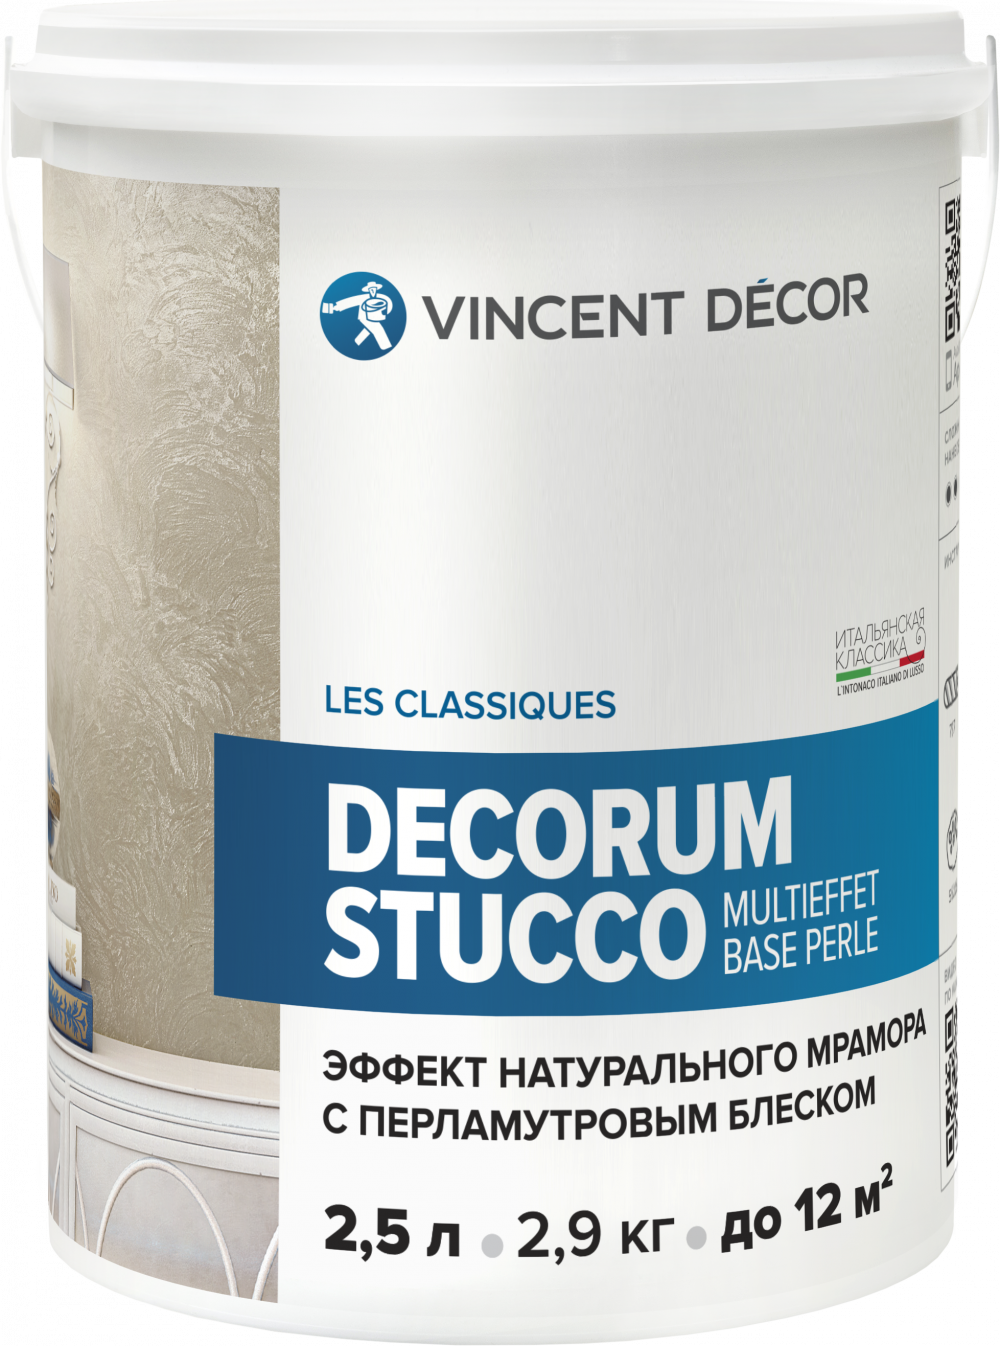 VINCENT DECOR DECORUM STUCCO MULTIEFFET BASE PERL штукатурка венецианская перламутровая